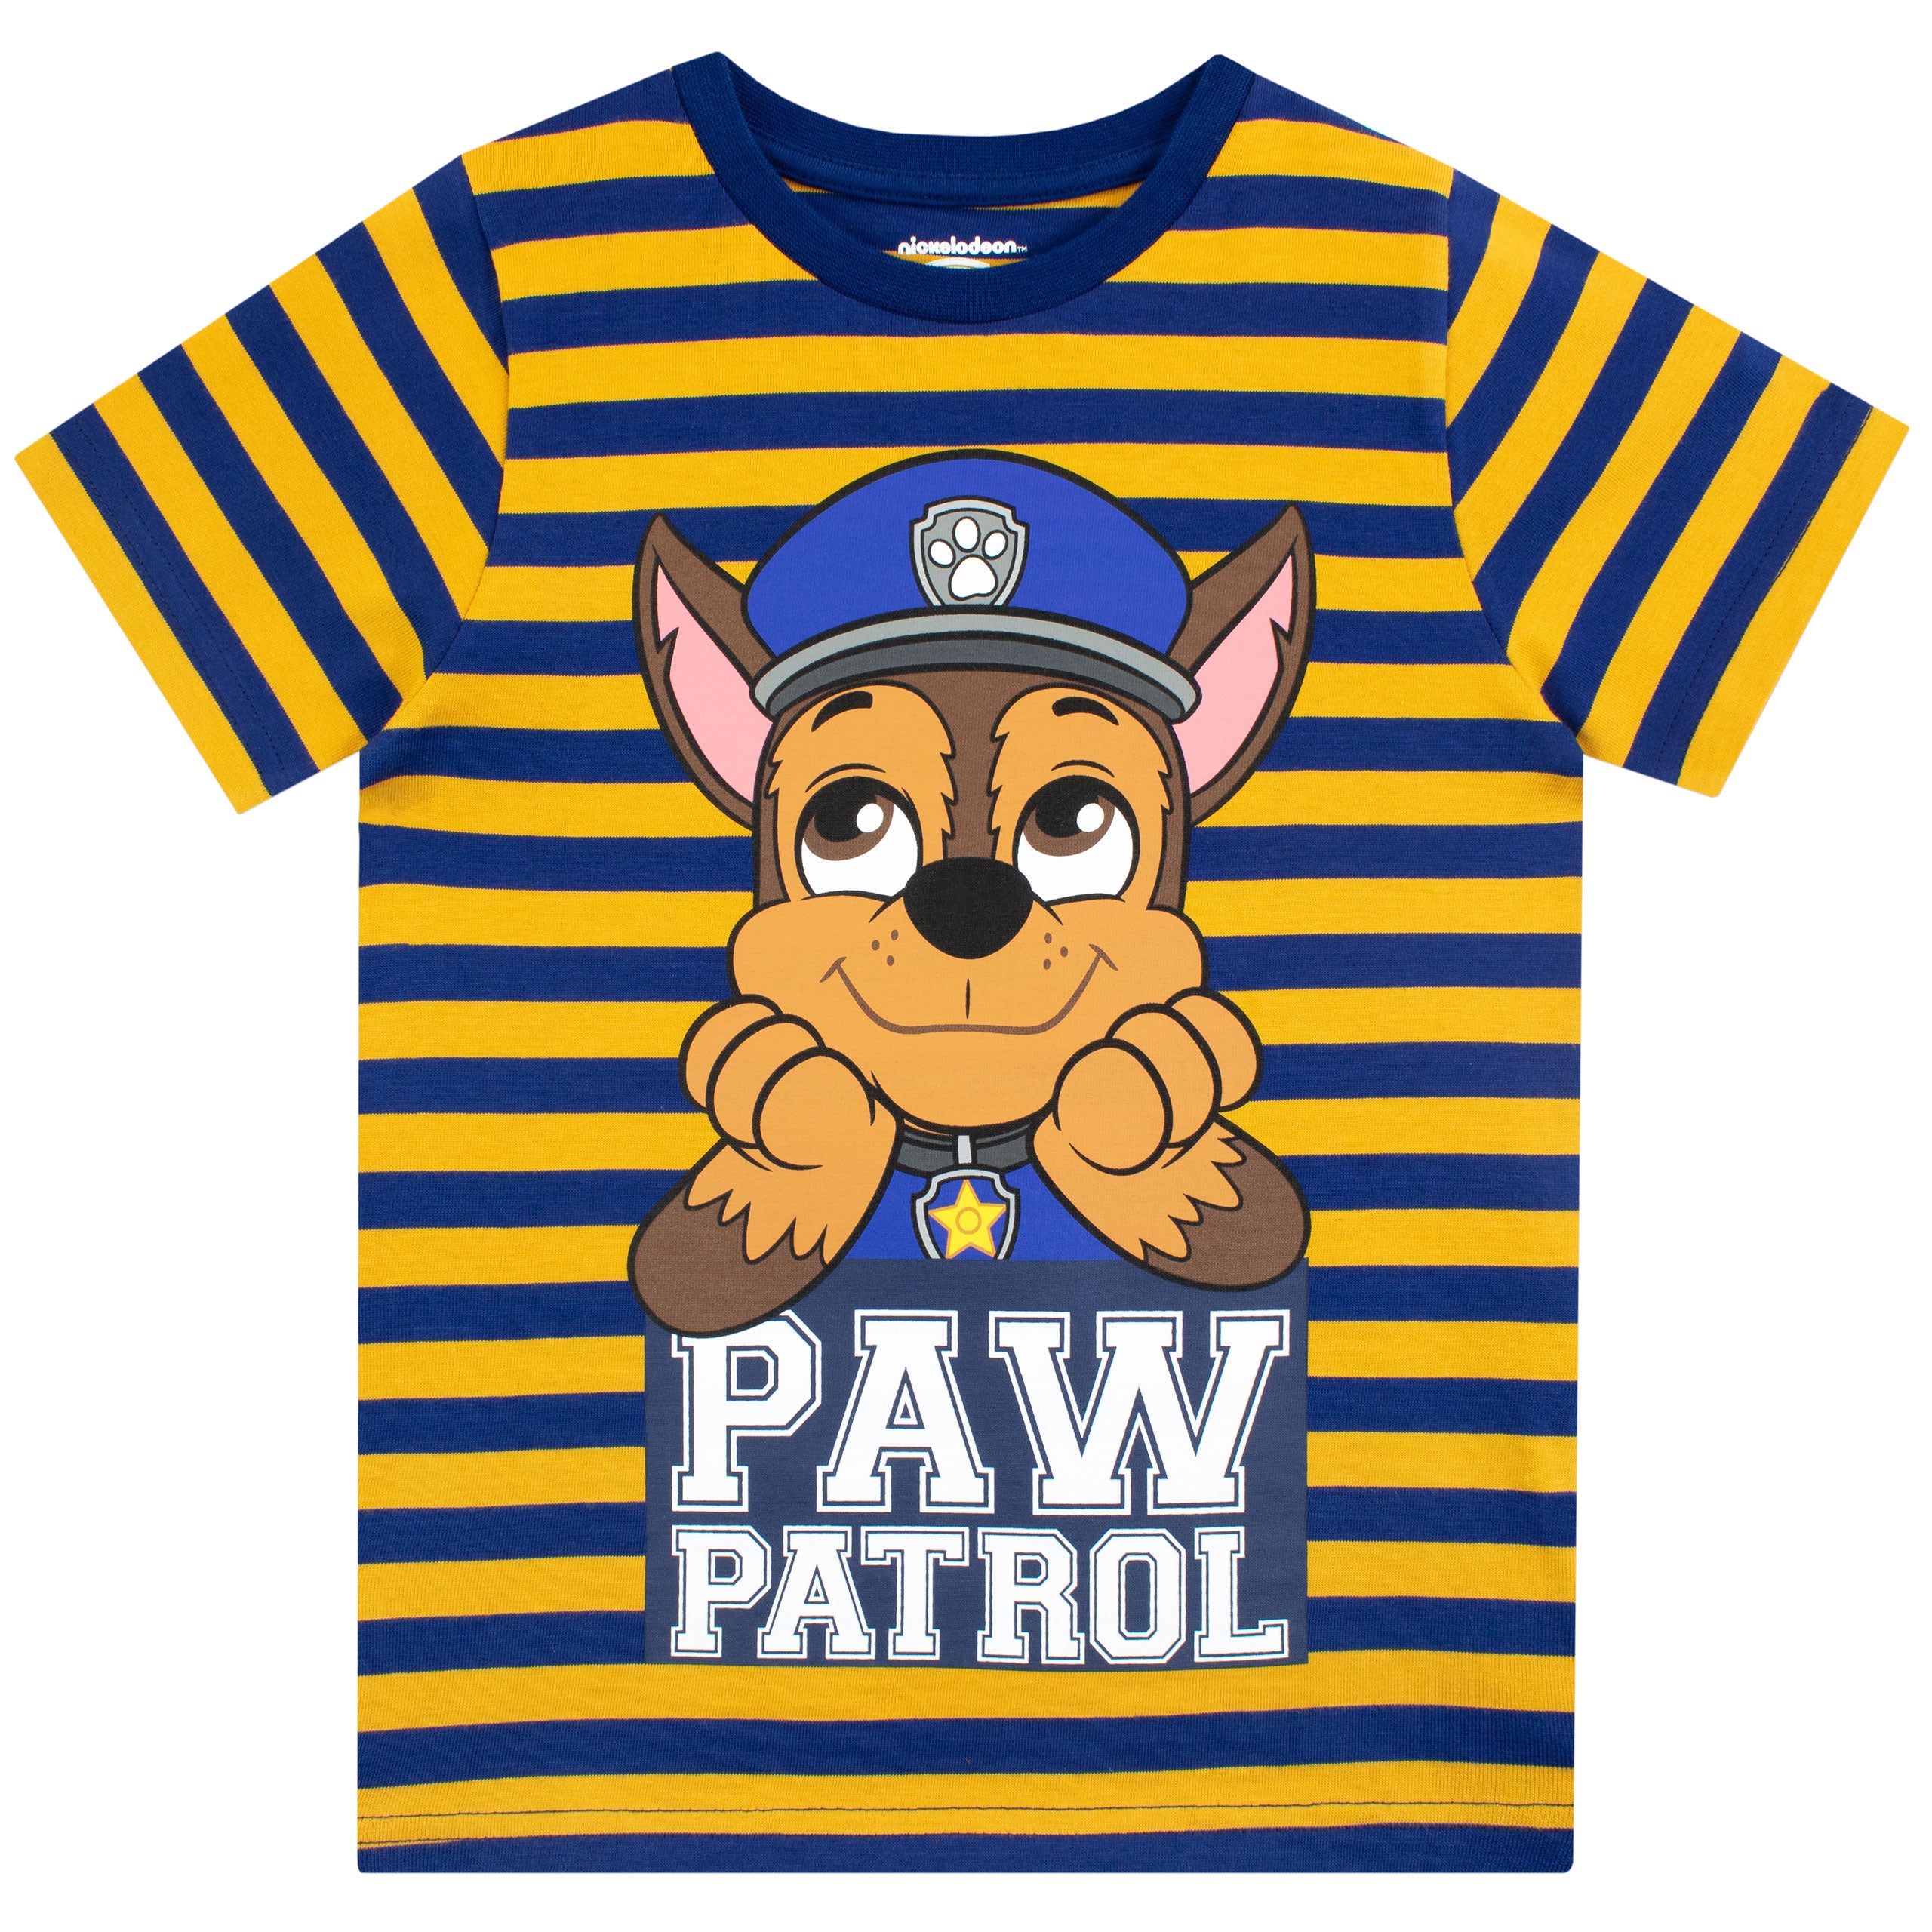 Merchandise Kids |Kids Paw Patrol Character.com | T-Shirt Official